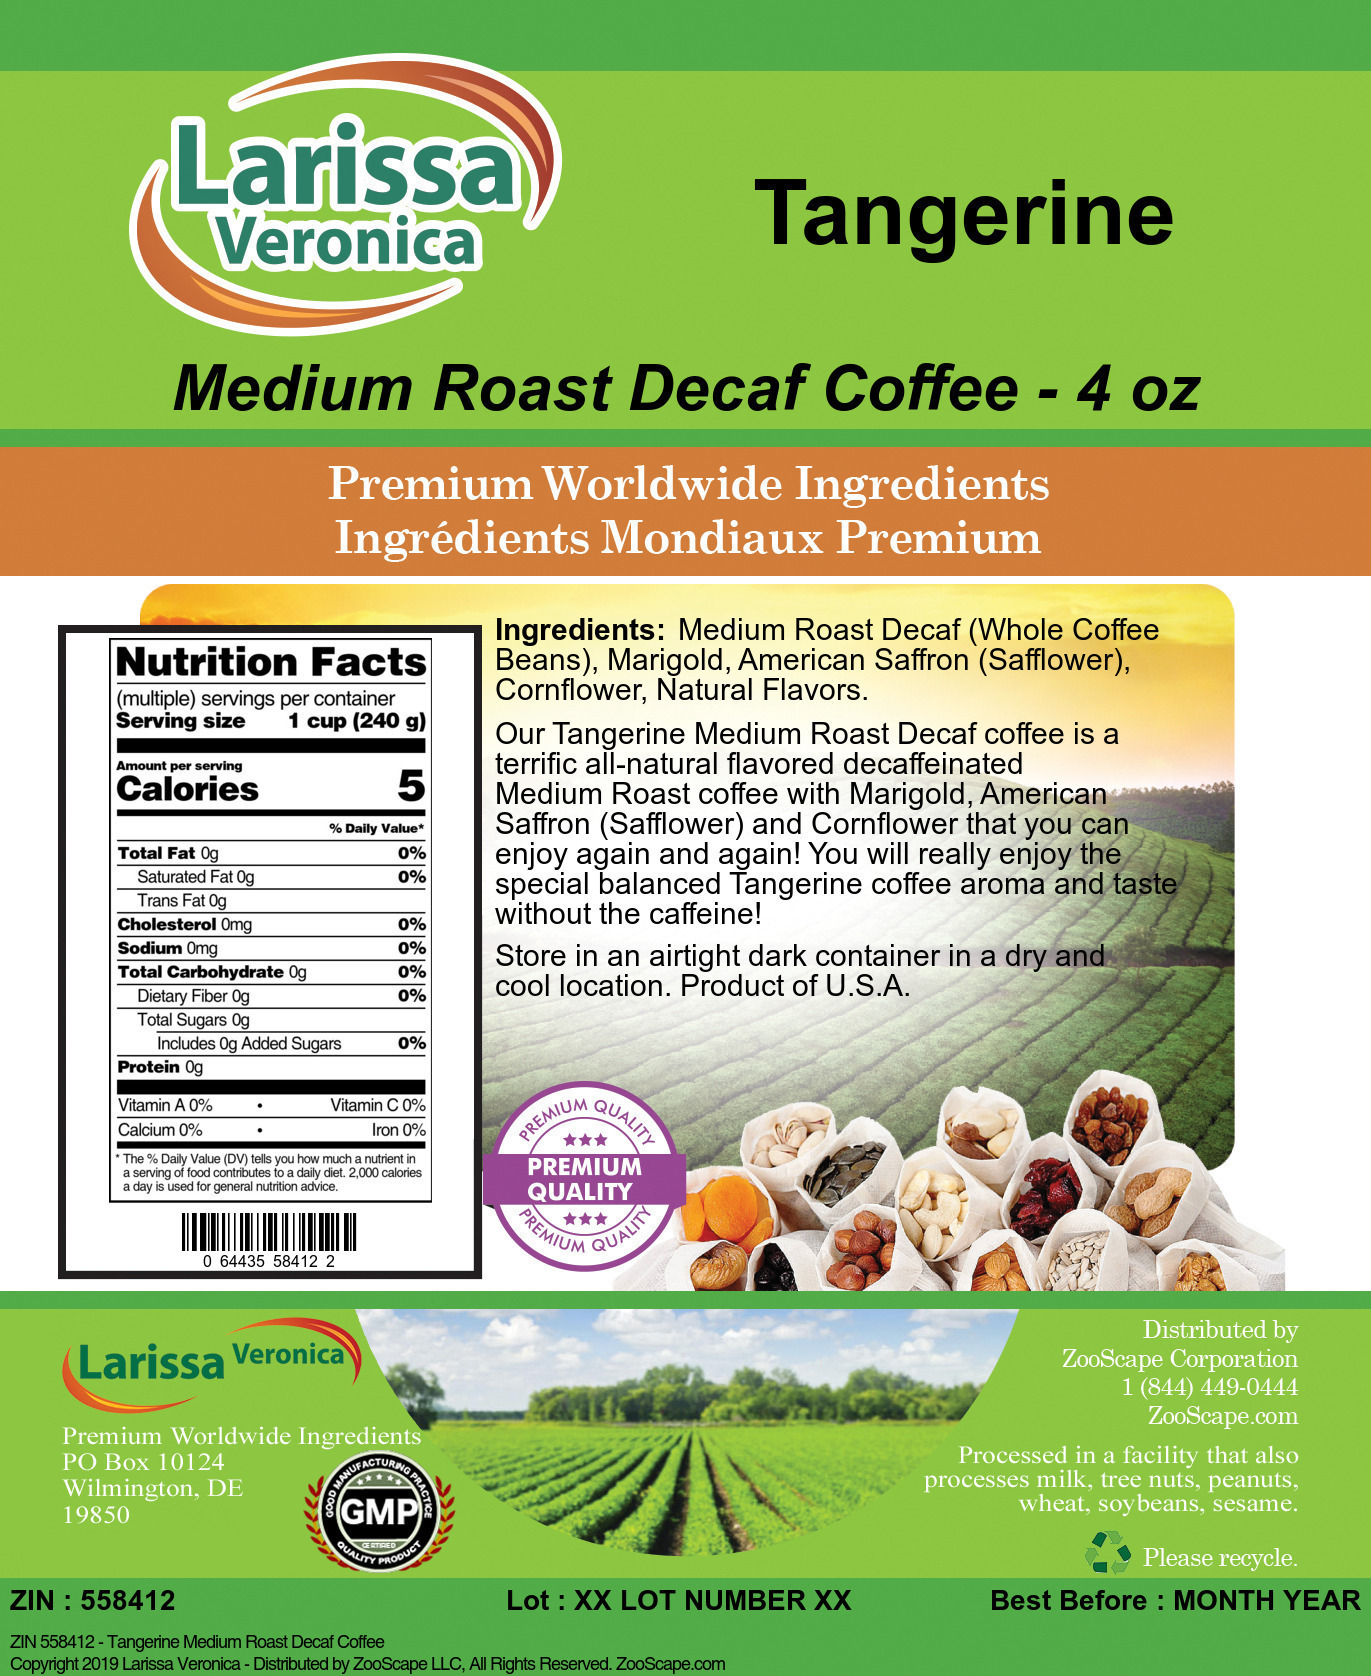 Tangerine Medium Roast Decaf Coffee - Label